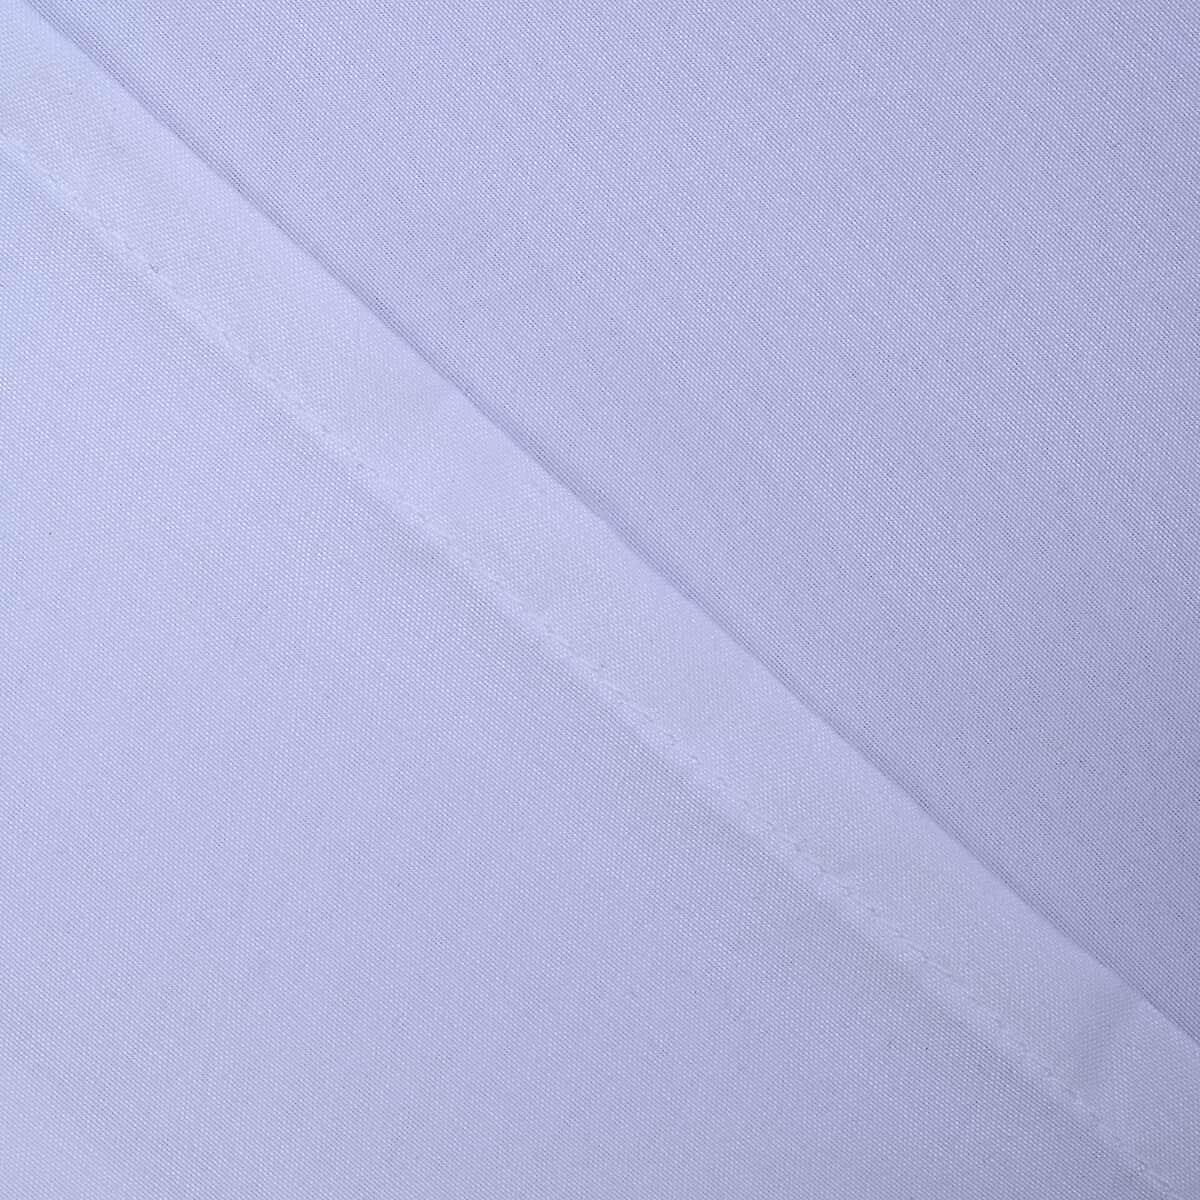 Homesmart White Solid Microfiber Quilt and Set of 2 Shams - King image number 3